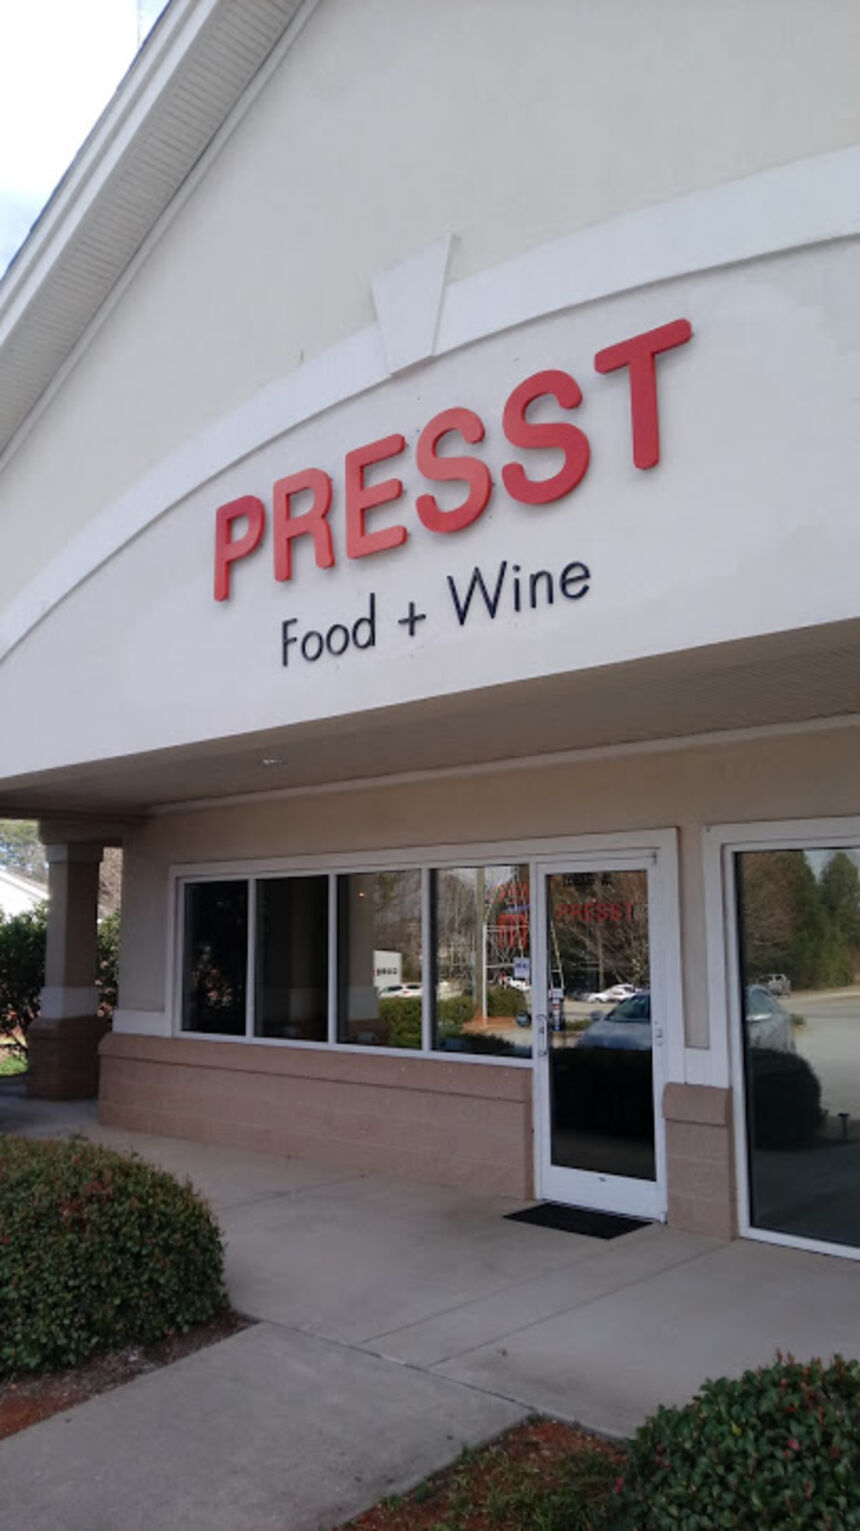 Presst food & wine